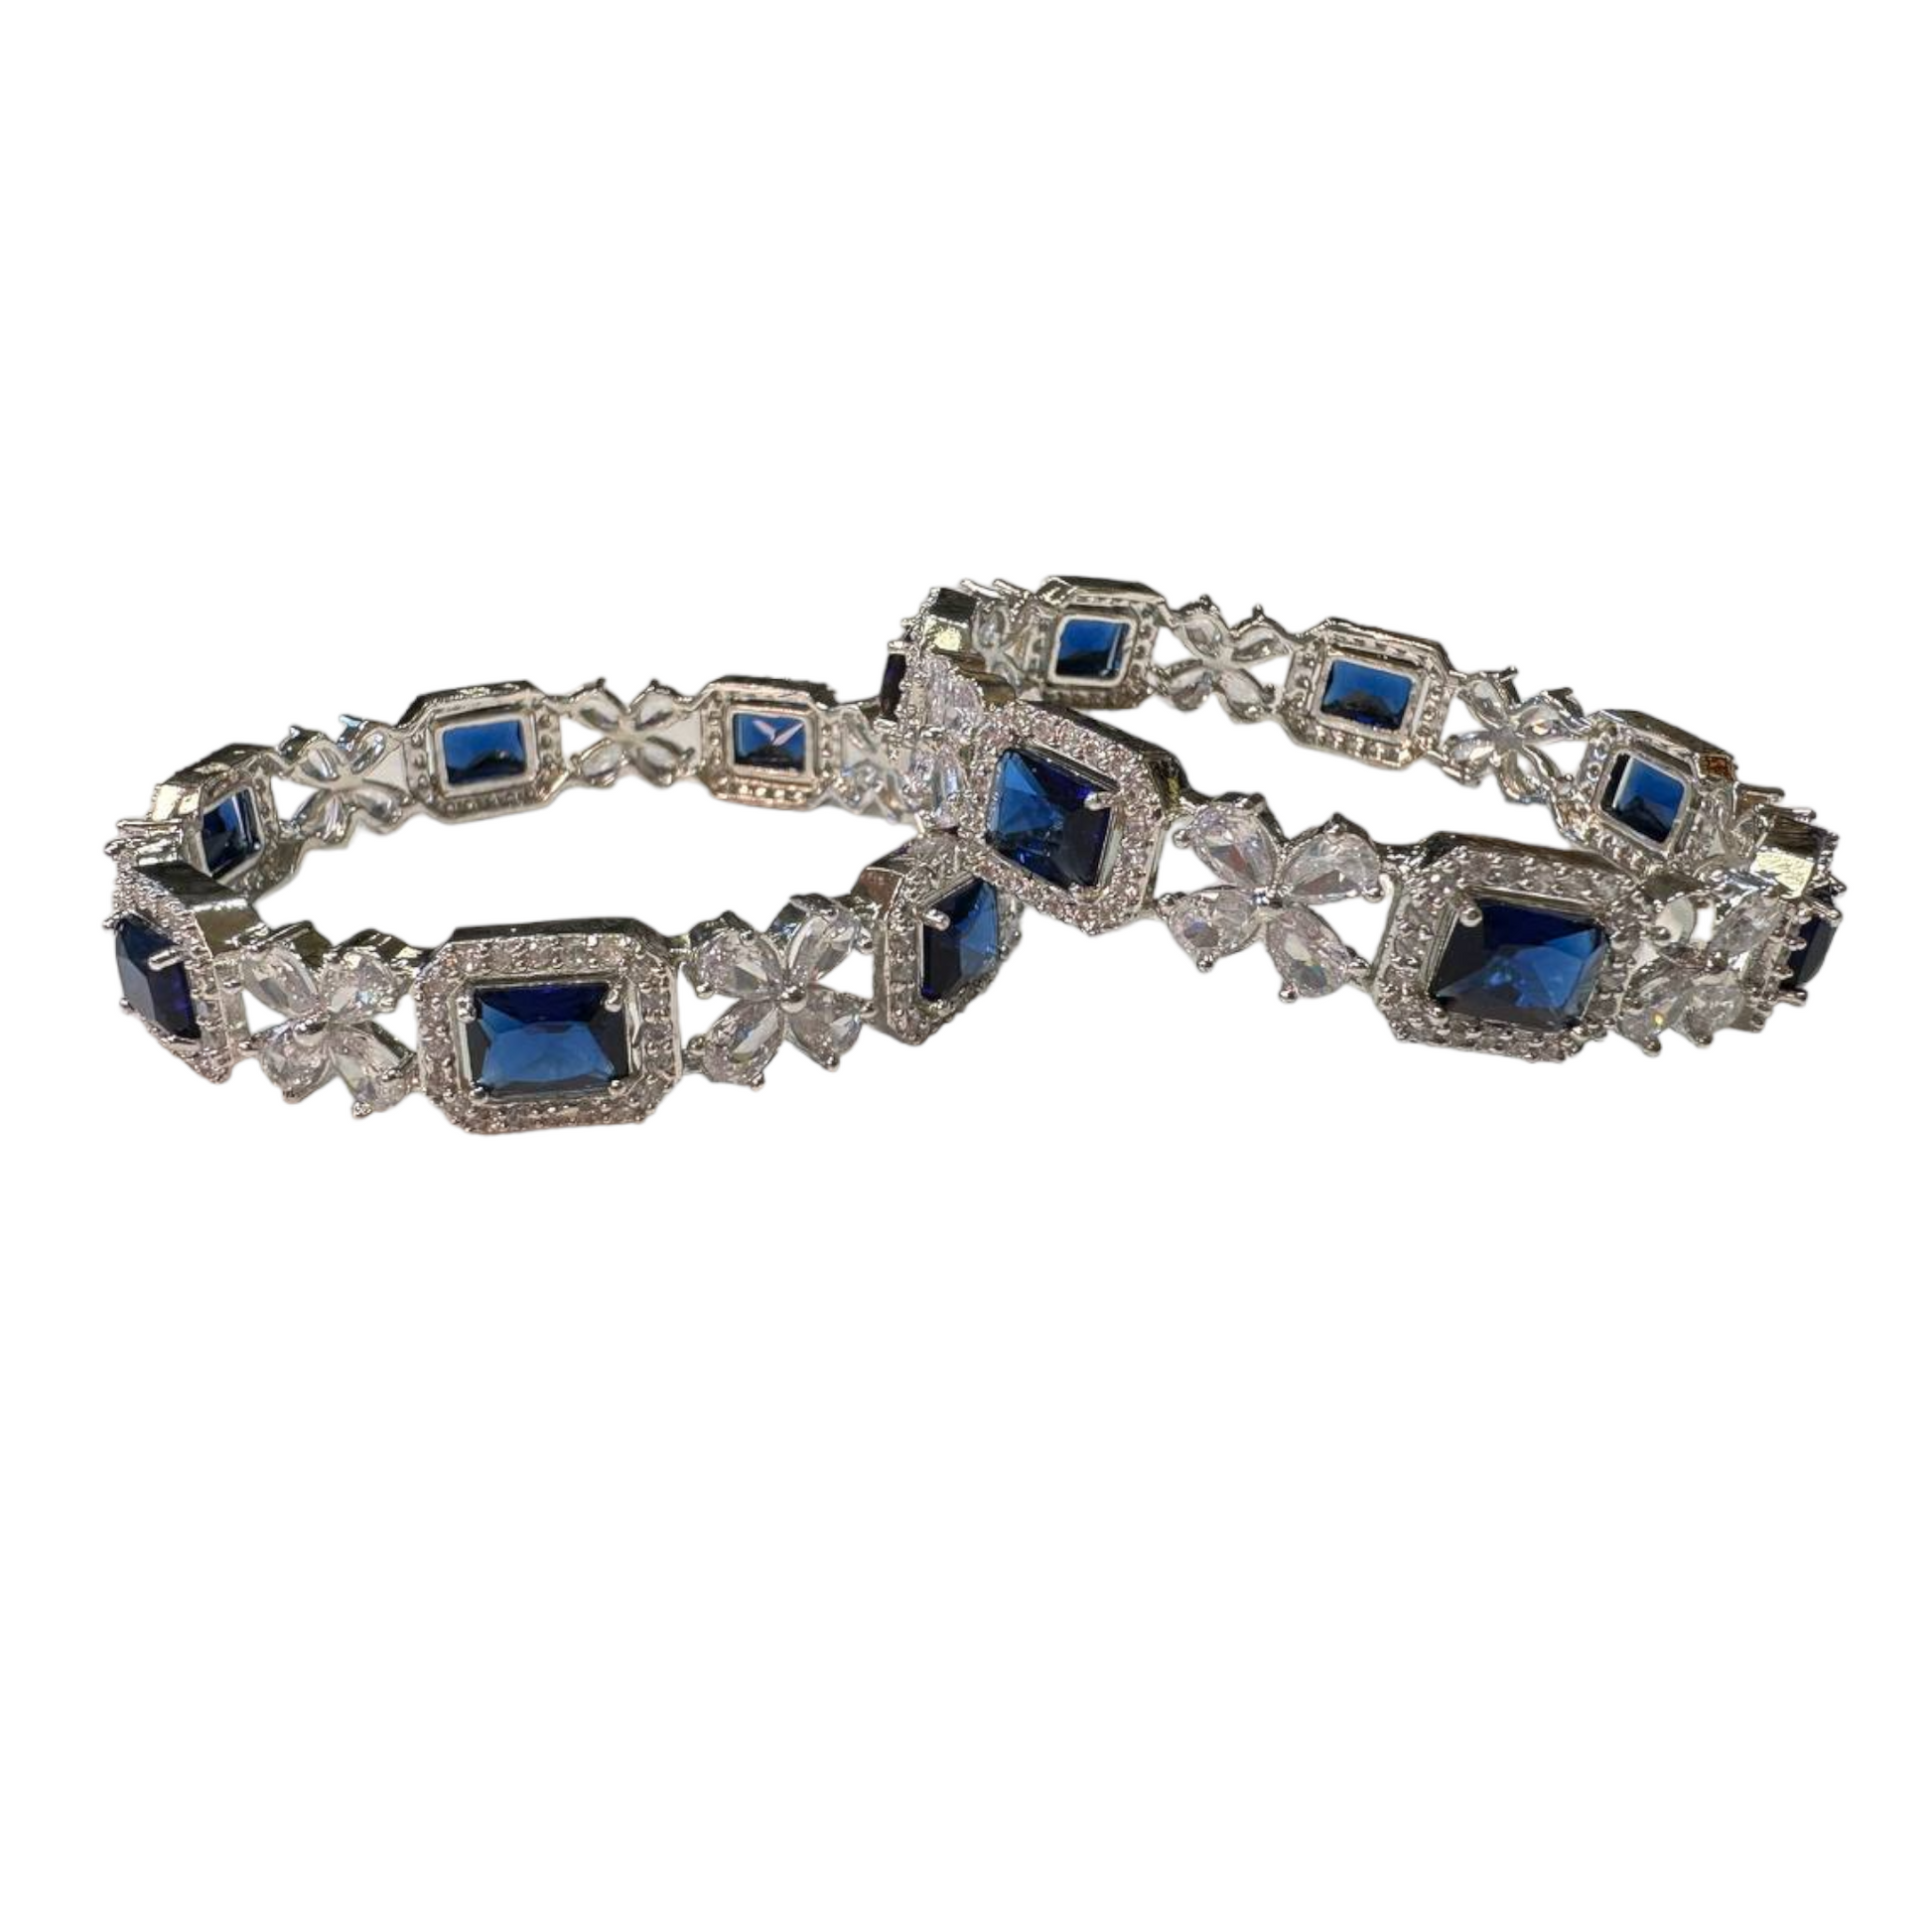 2pc Silver Bangles with American Diamond CZ & Blue Stones #ADBS18